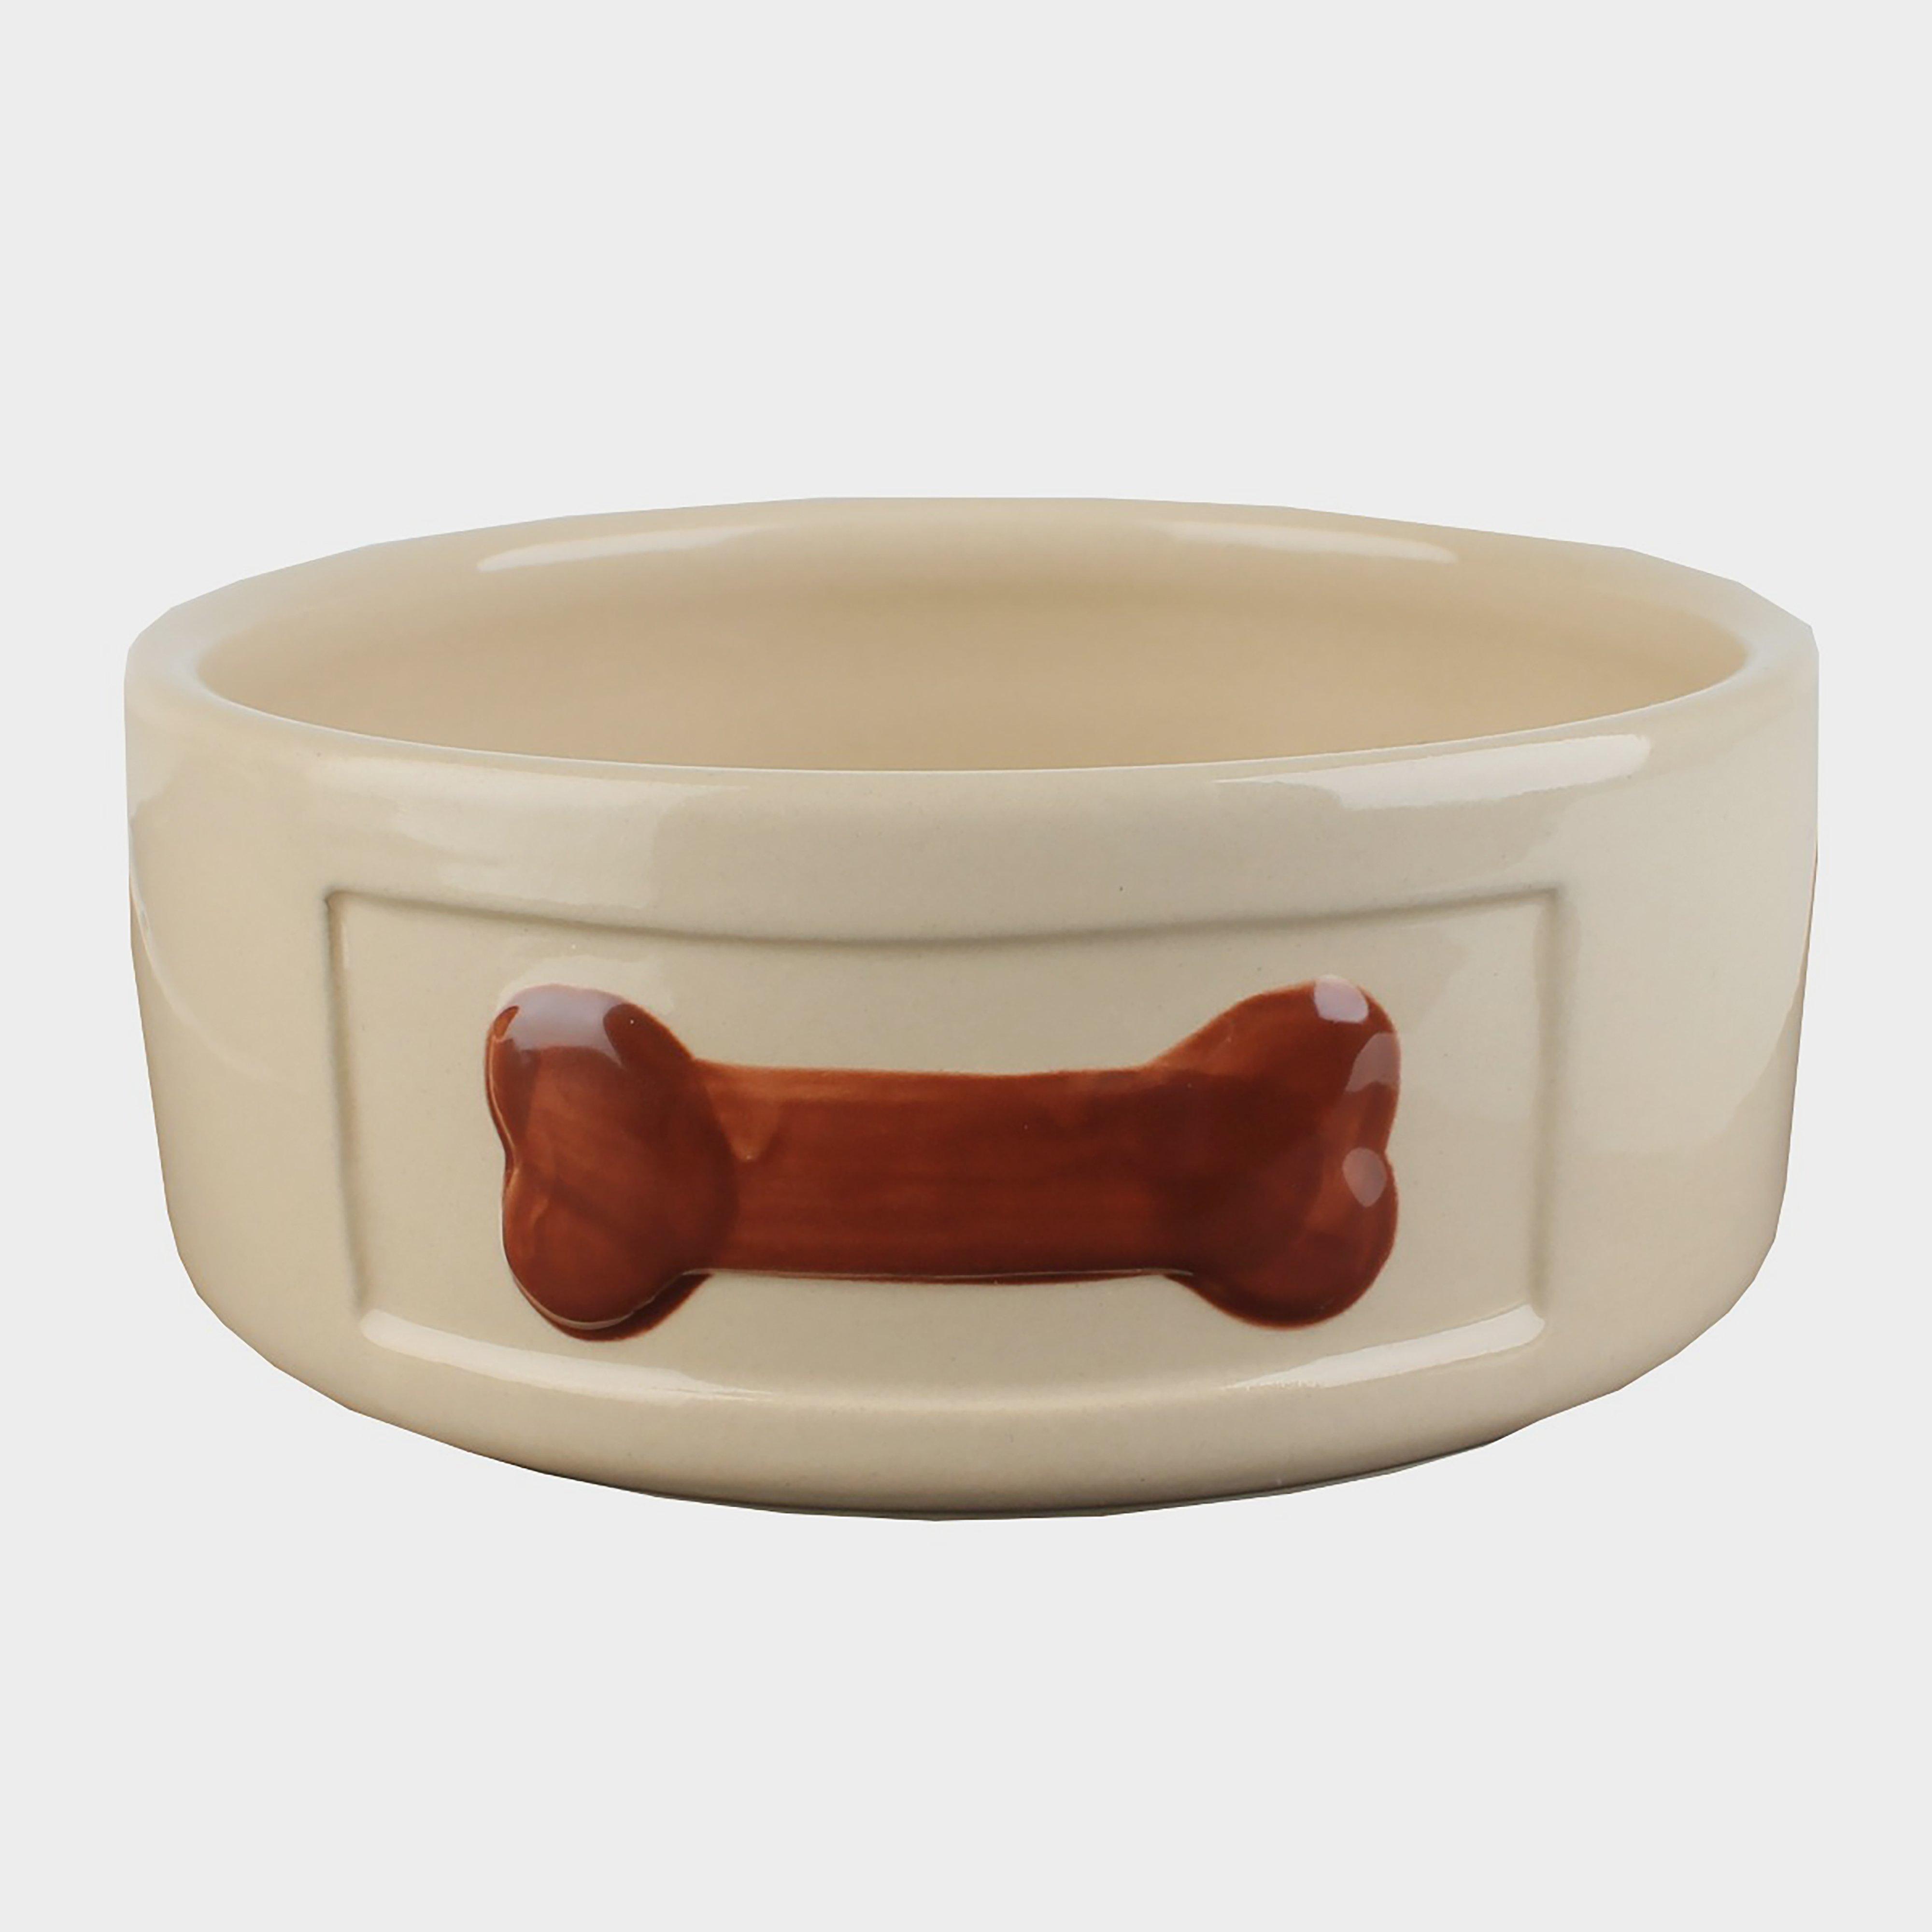 Image of Petface Ceramic Dog Bowl - Bowl/Bowl, BOWL/BOWL